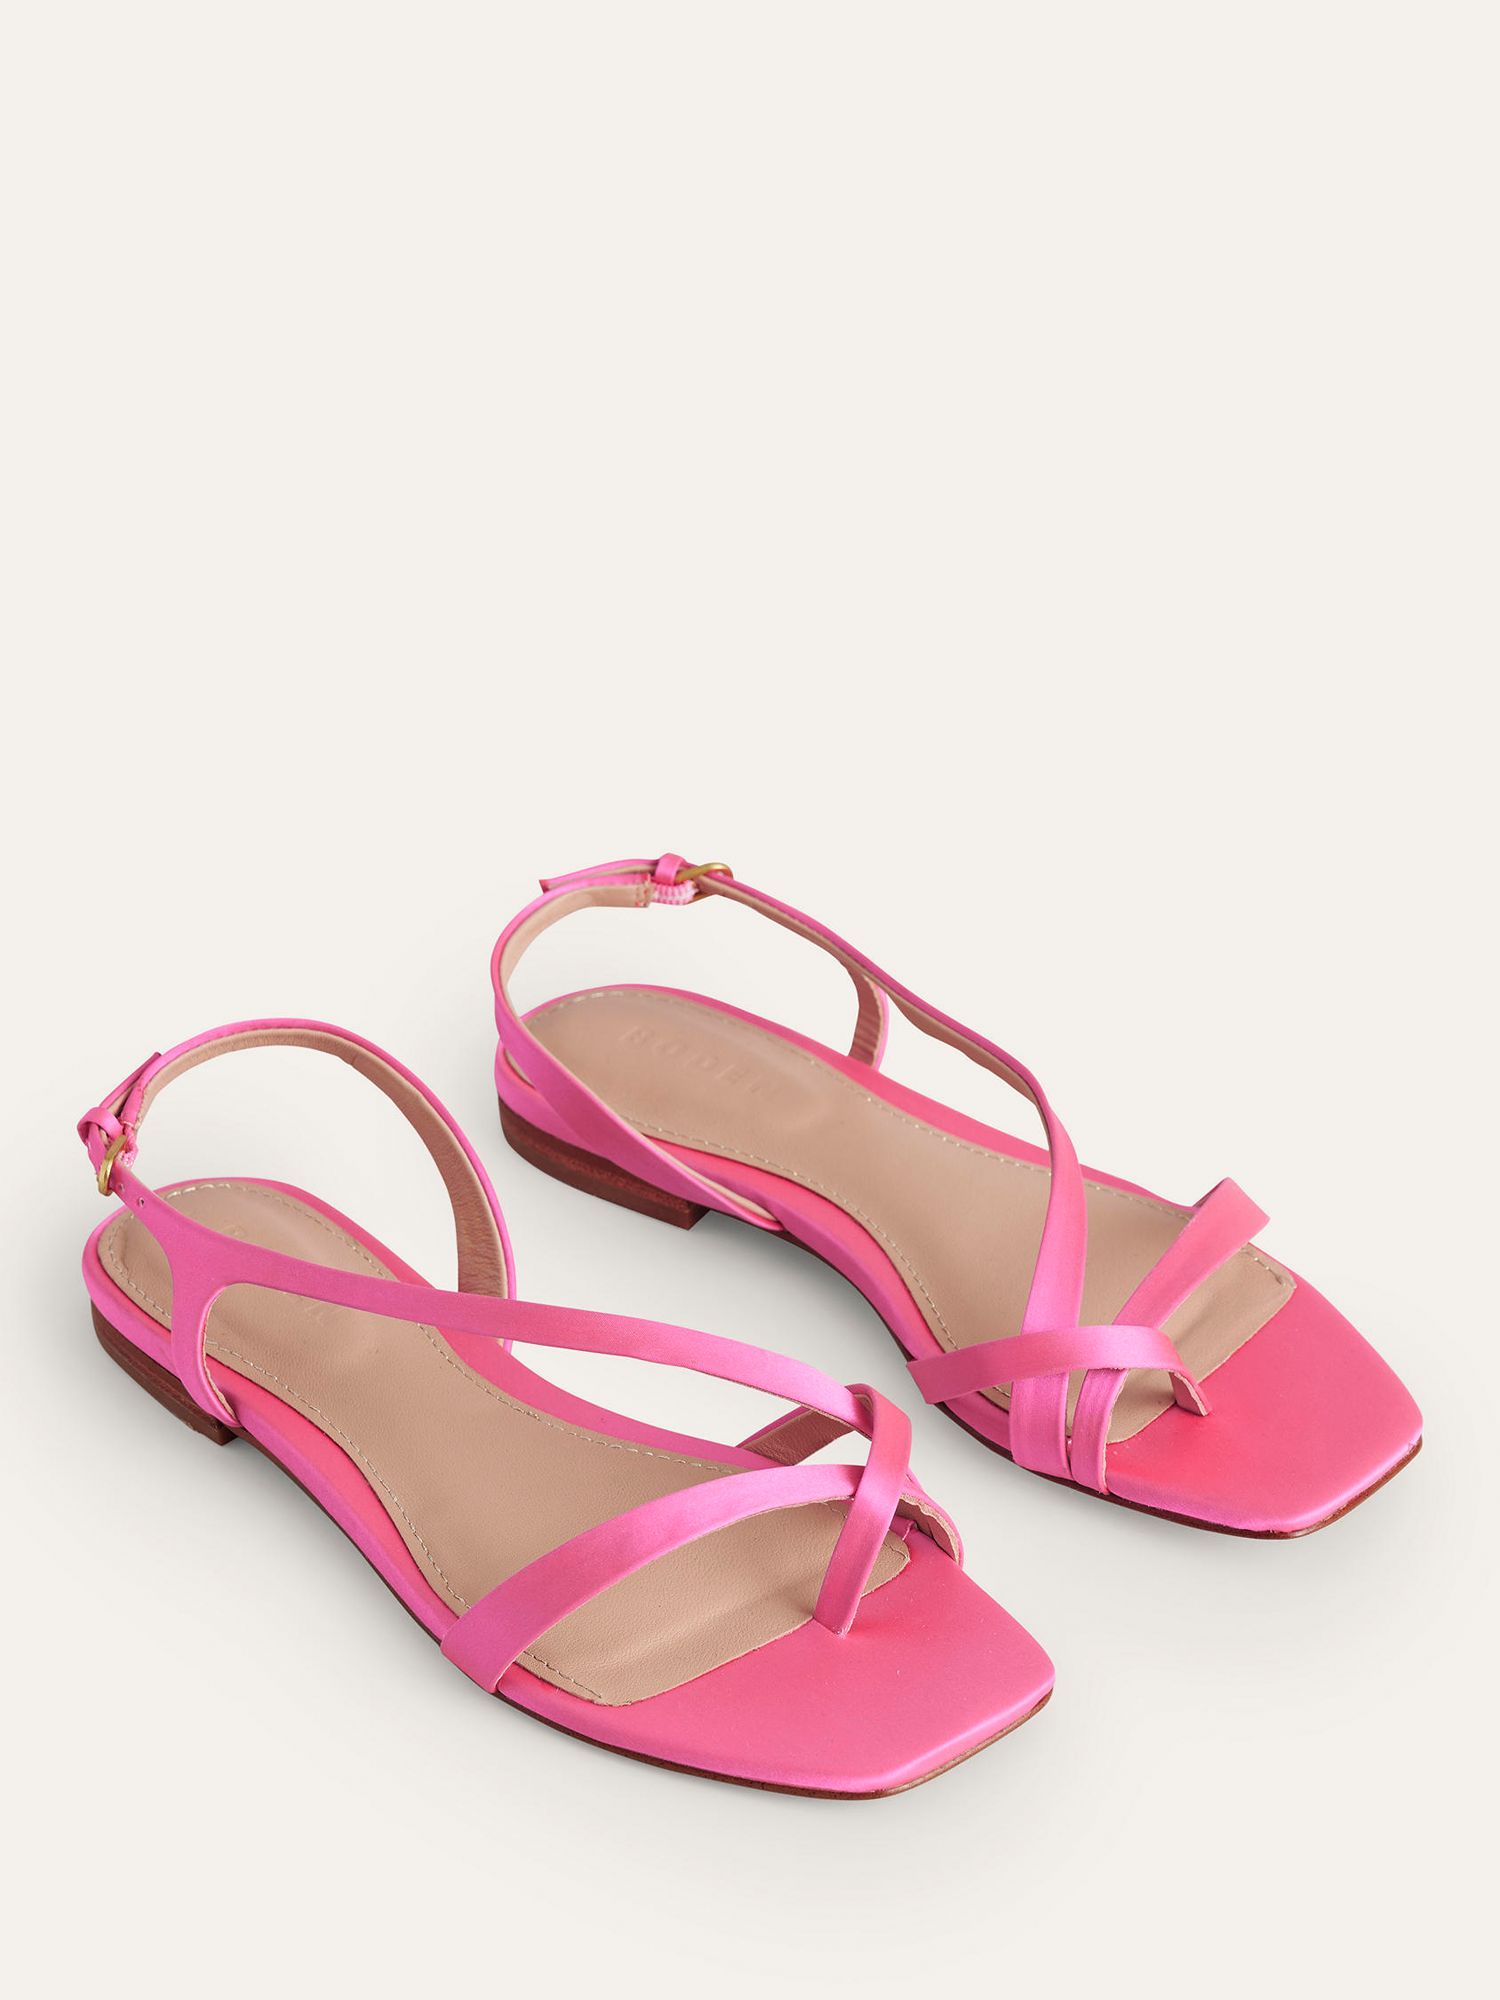 Boden Toe Loop Satin Flat Sandals, Festival Pink at John Lewis & Partners